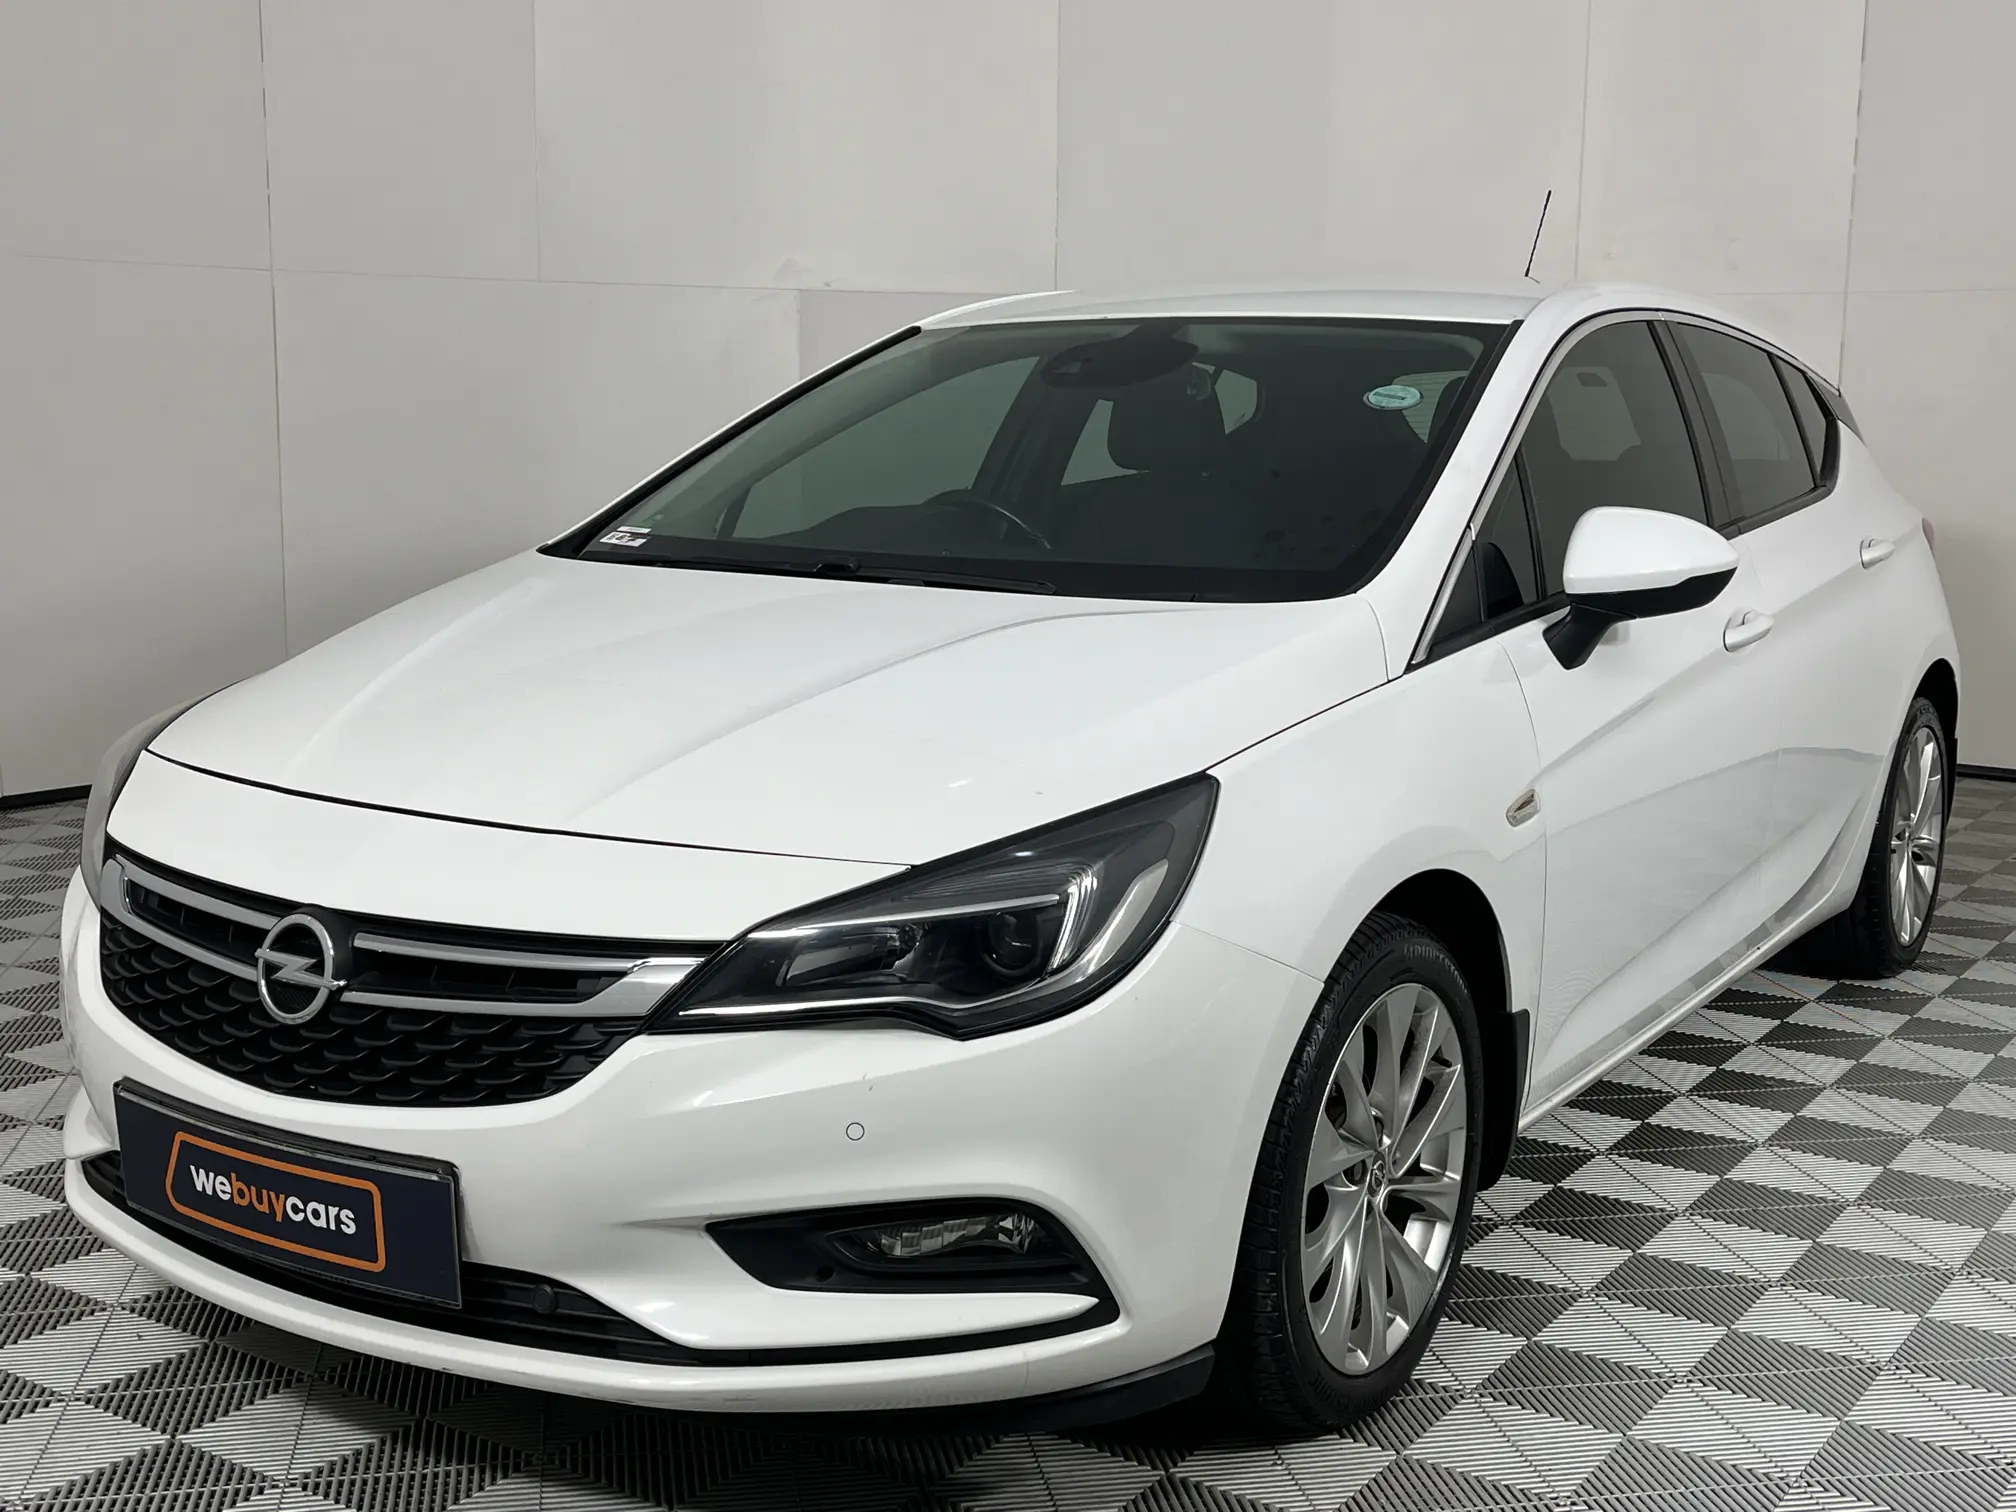 2018 Opel Astra 1.4T Enjoy Auto (5dr)